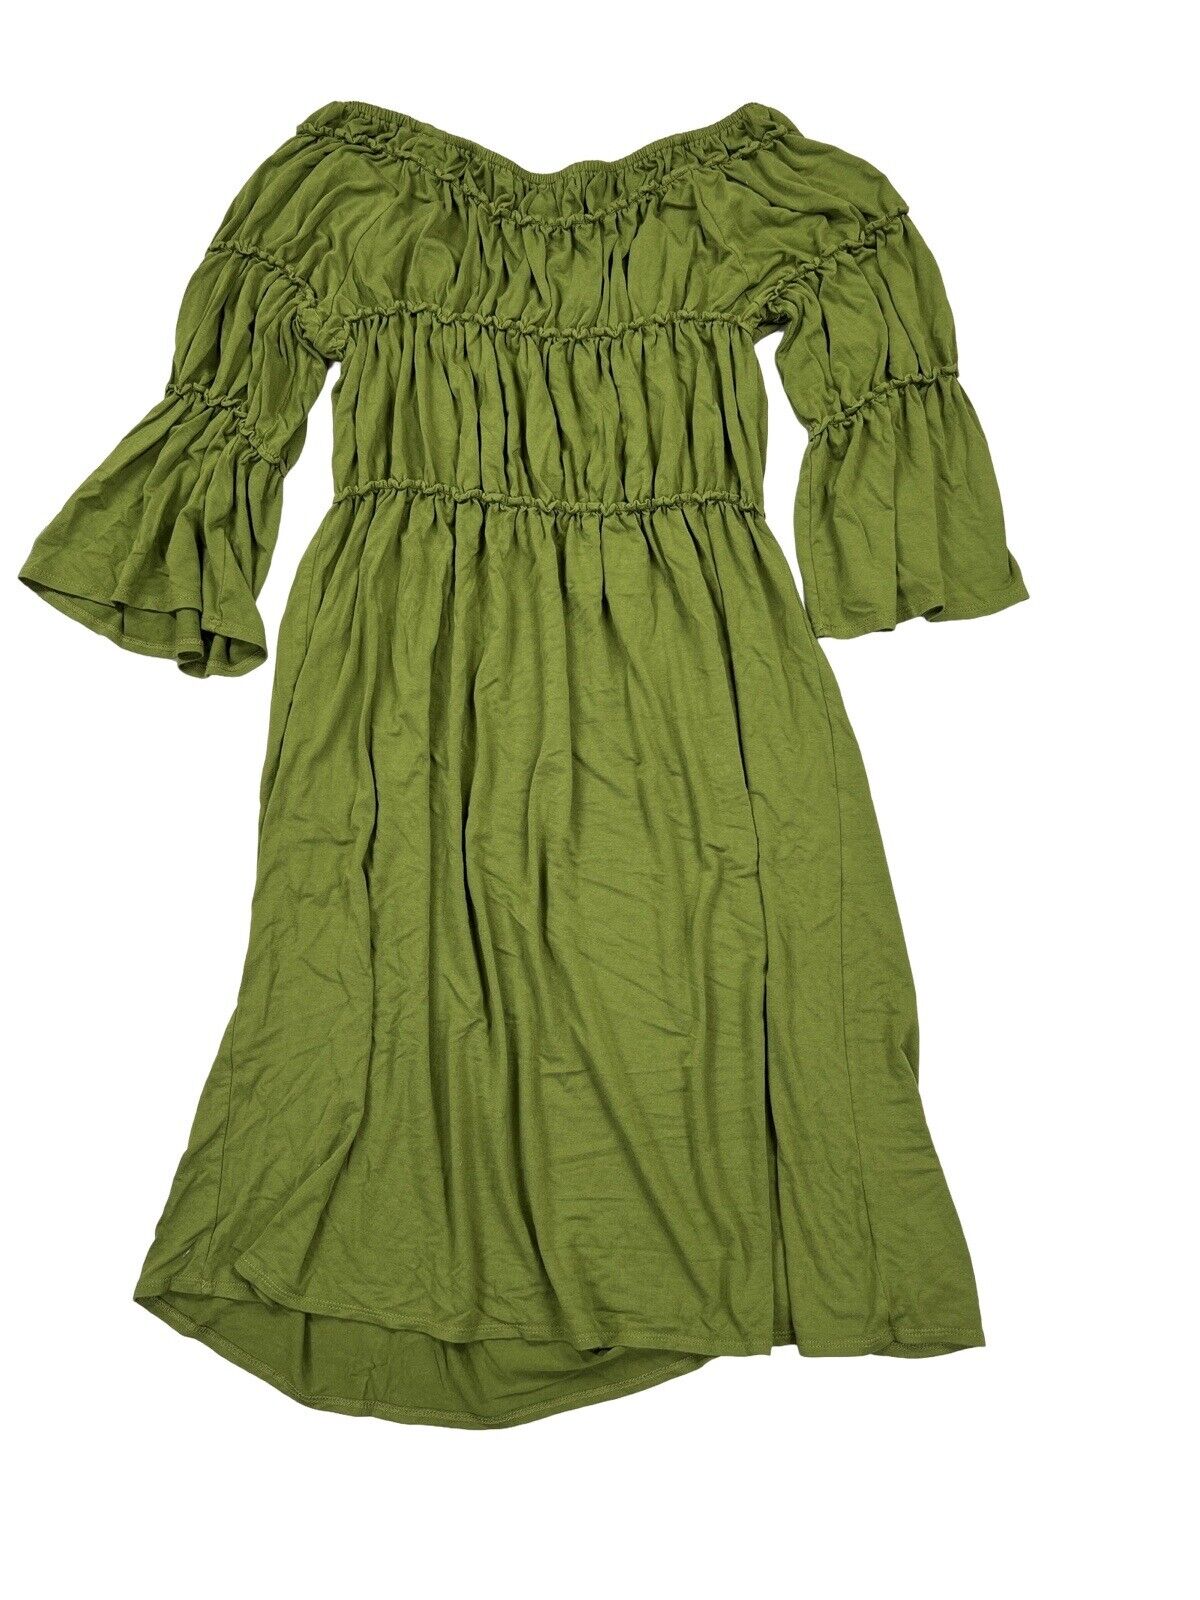 Max Studio Women's Green 3/4 Sleeve Boho Style Dress - L